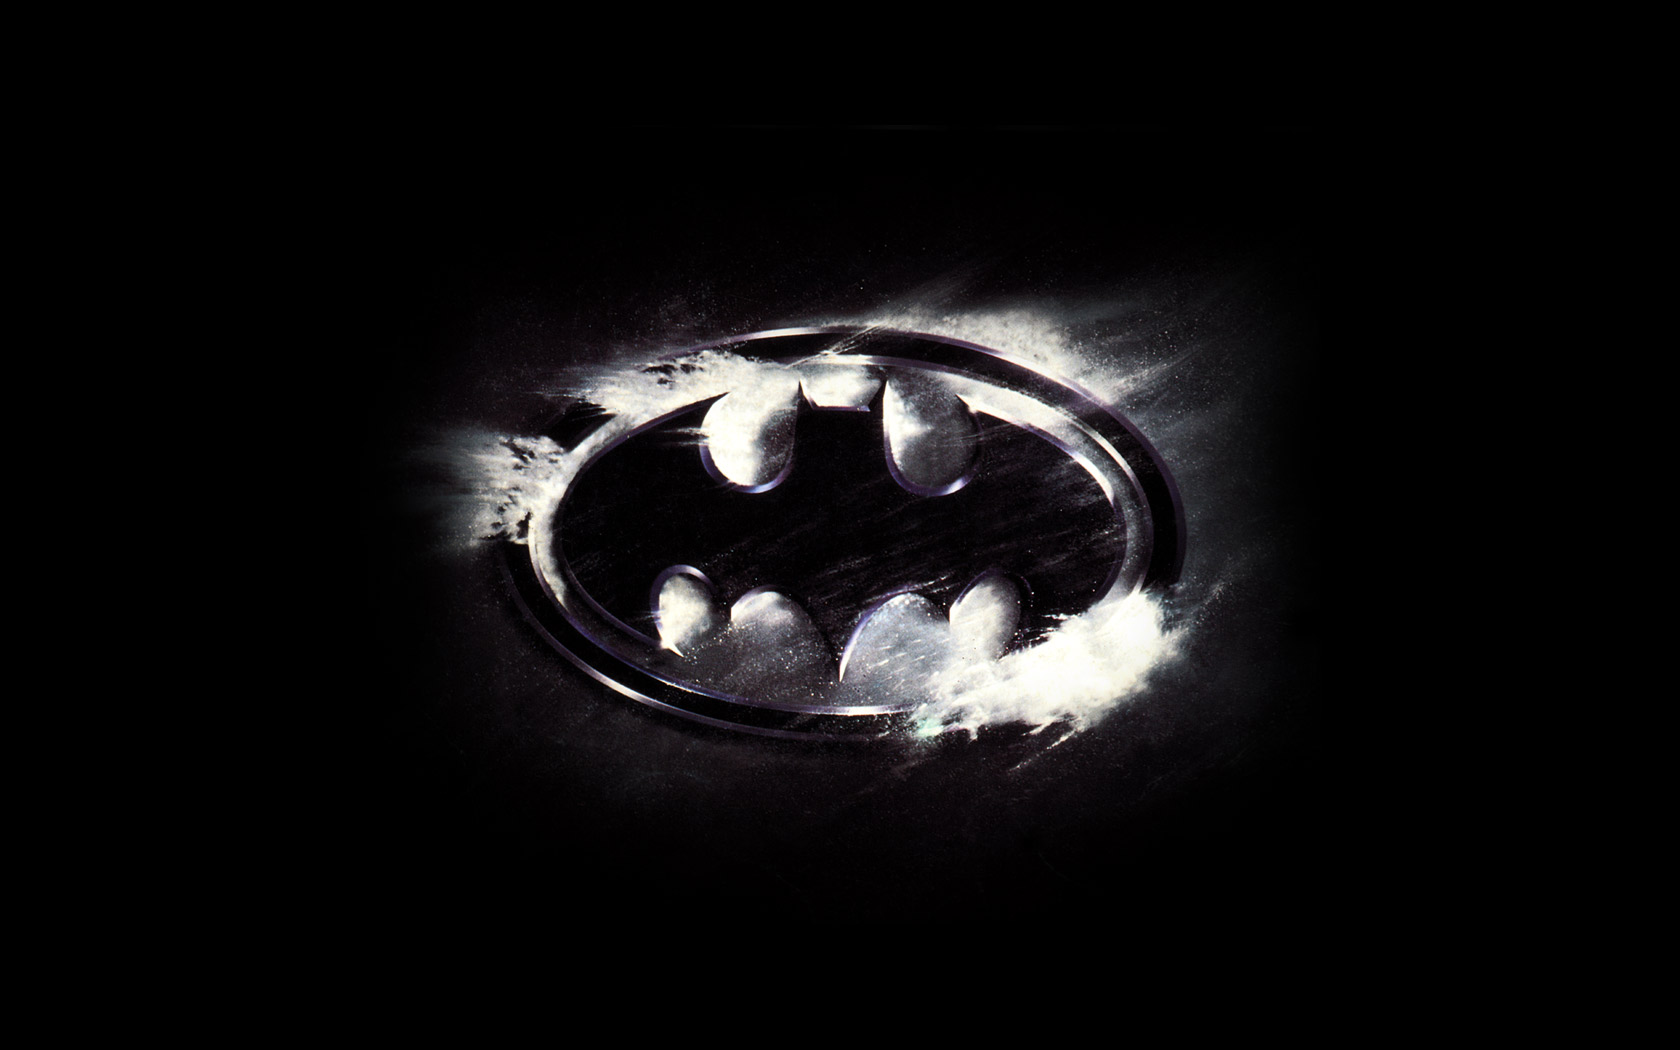 The Batman Theory Of Everything – Jon Negroni